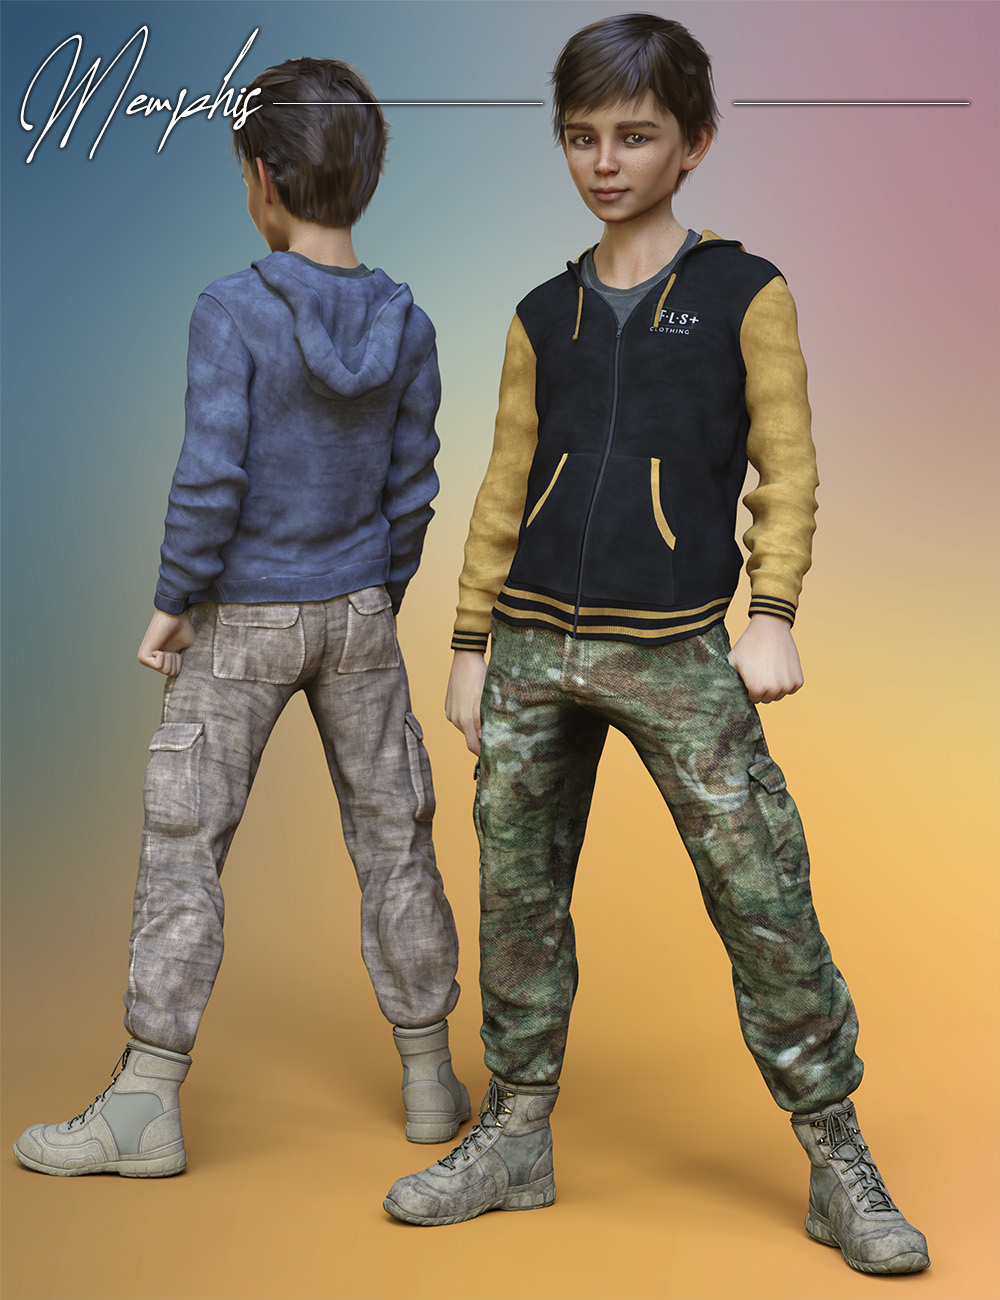 dForce Memphis Clothing for Genesis 8 Males by: 3D Universe, 3D Models by Daz 3D